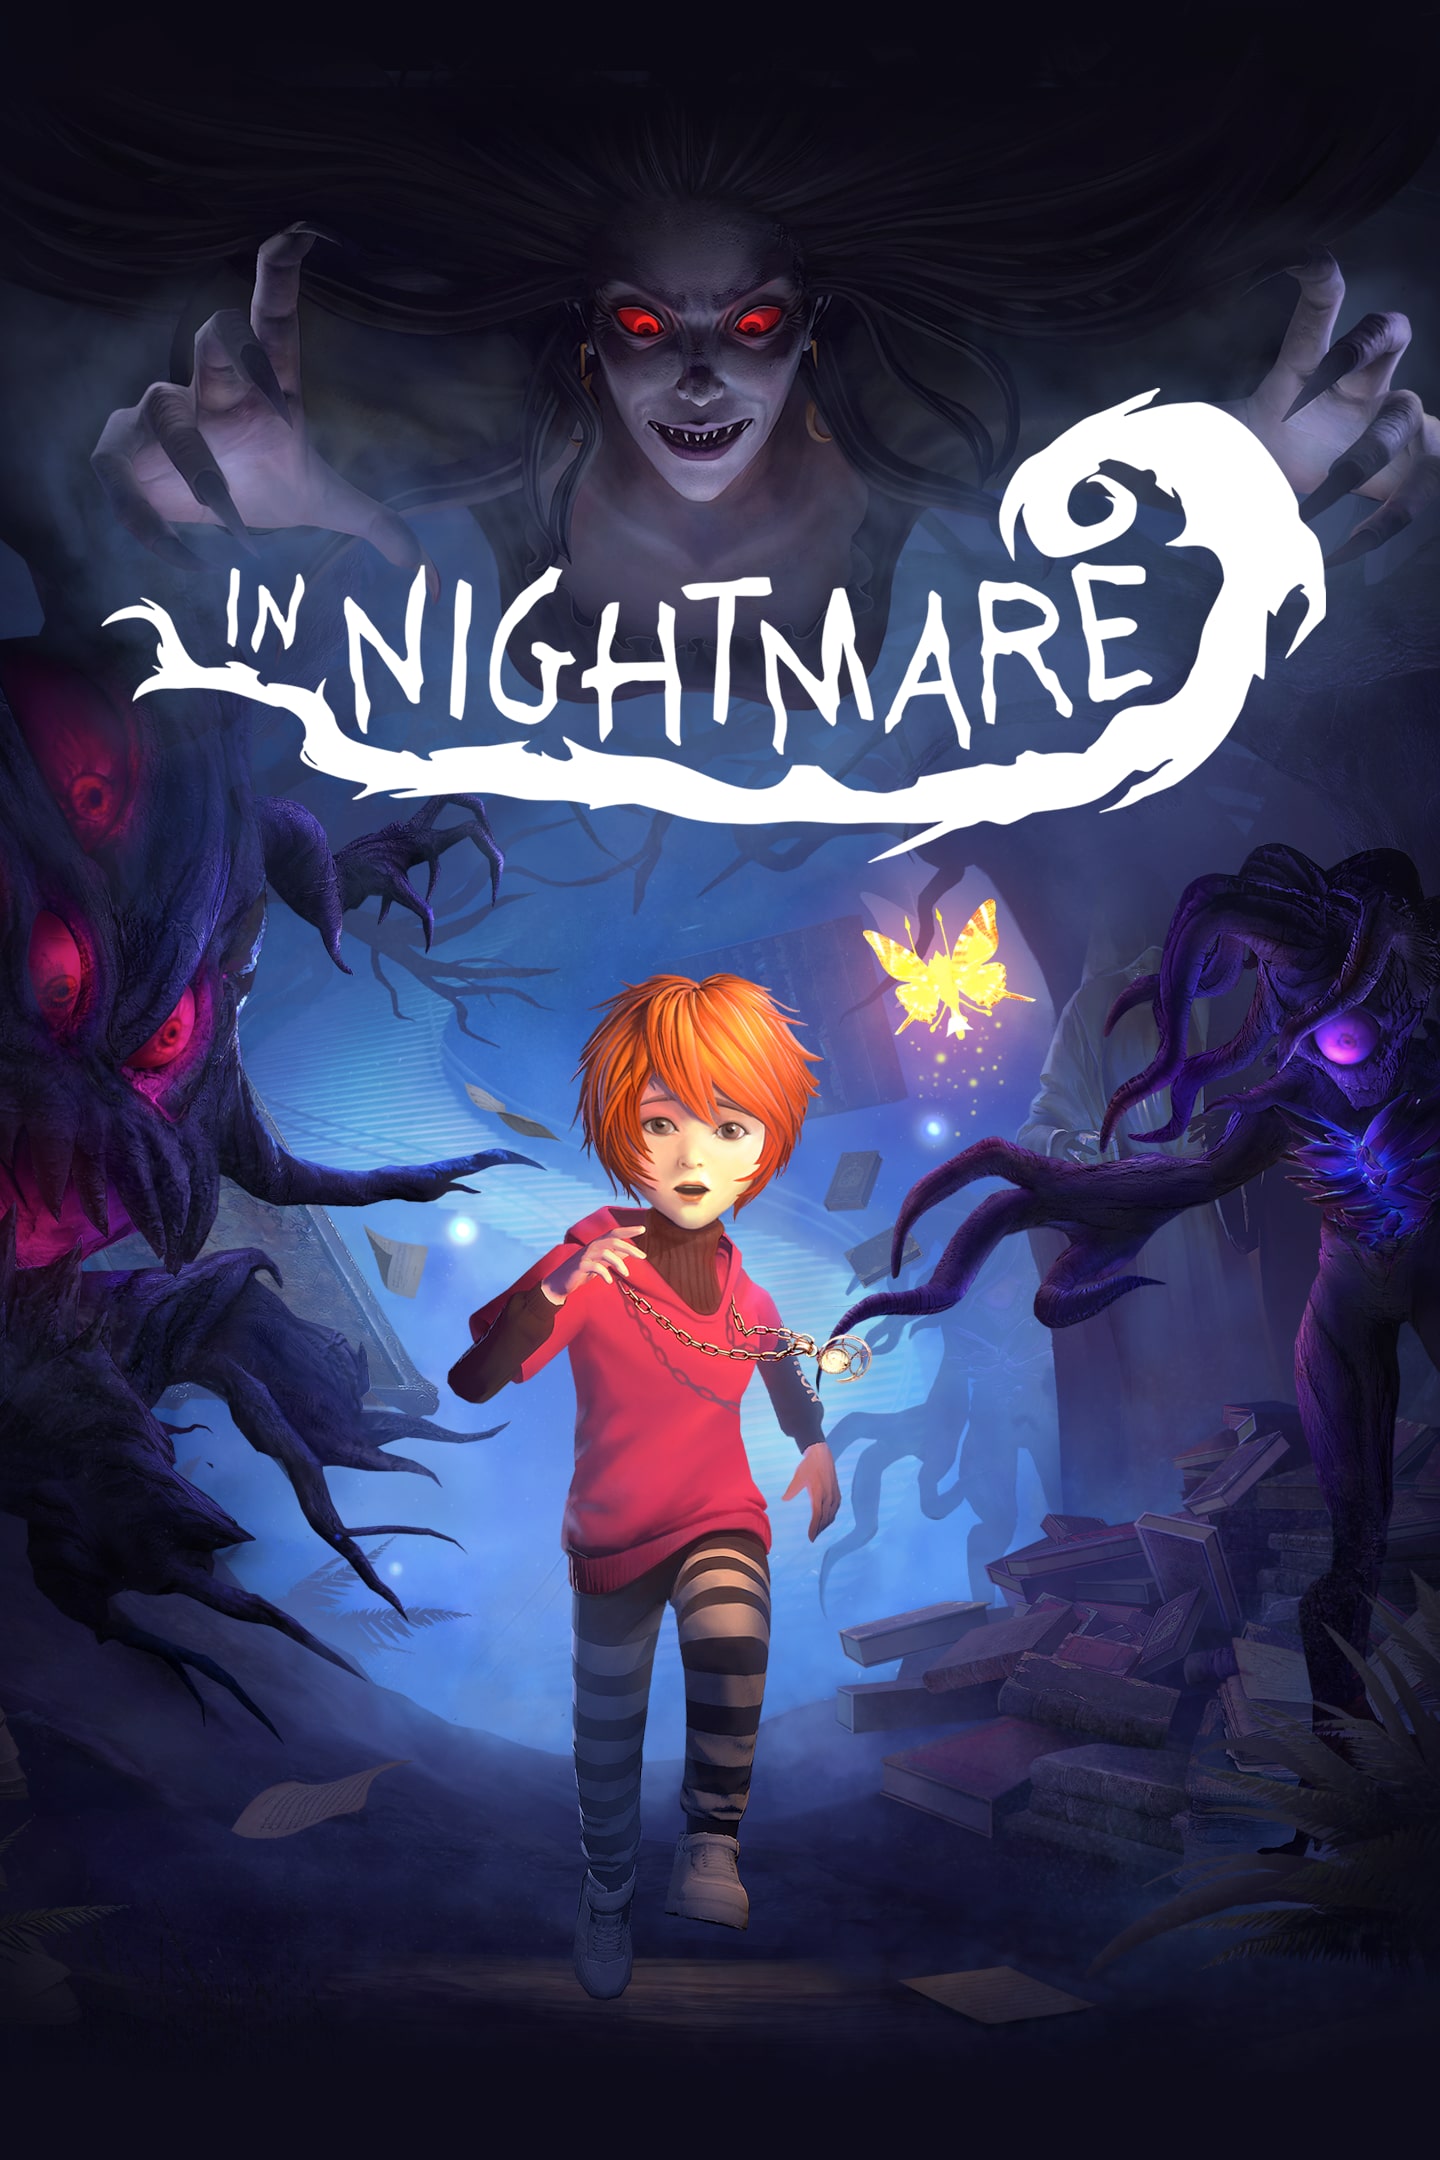 In Nightmare (PS4) - PlayStation 4